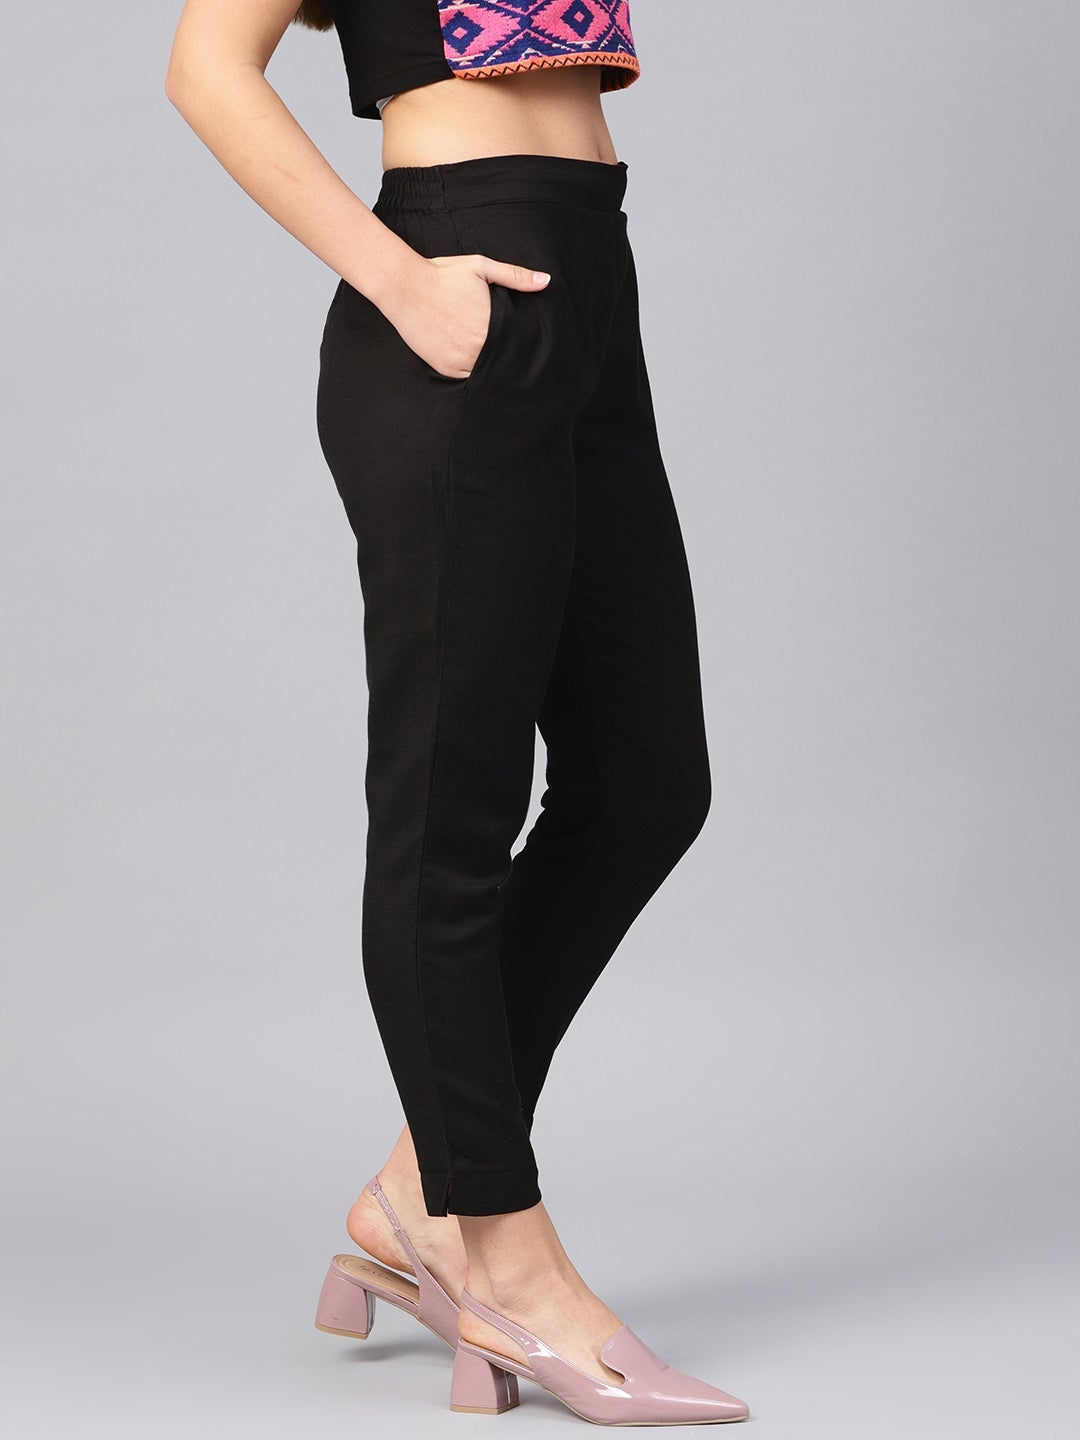 Black Rayon Flex Solid Slim Fit Pant/Slim Pant